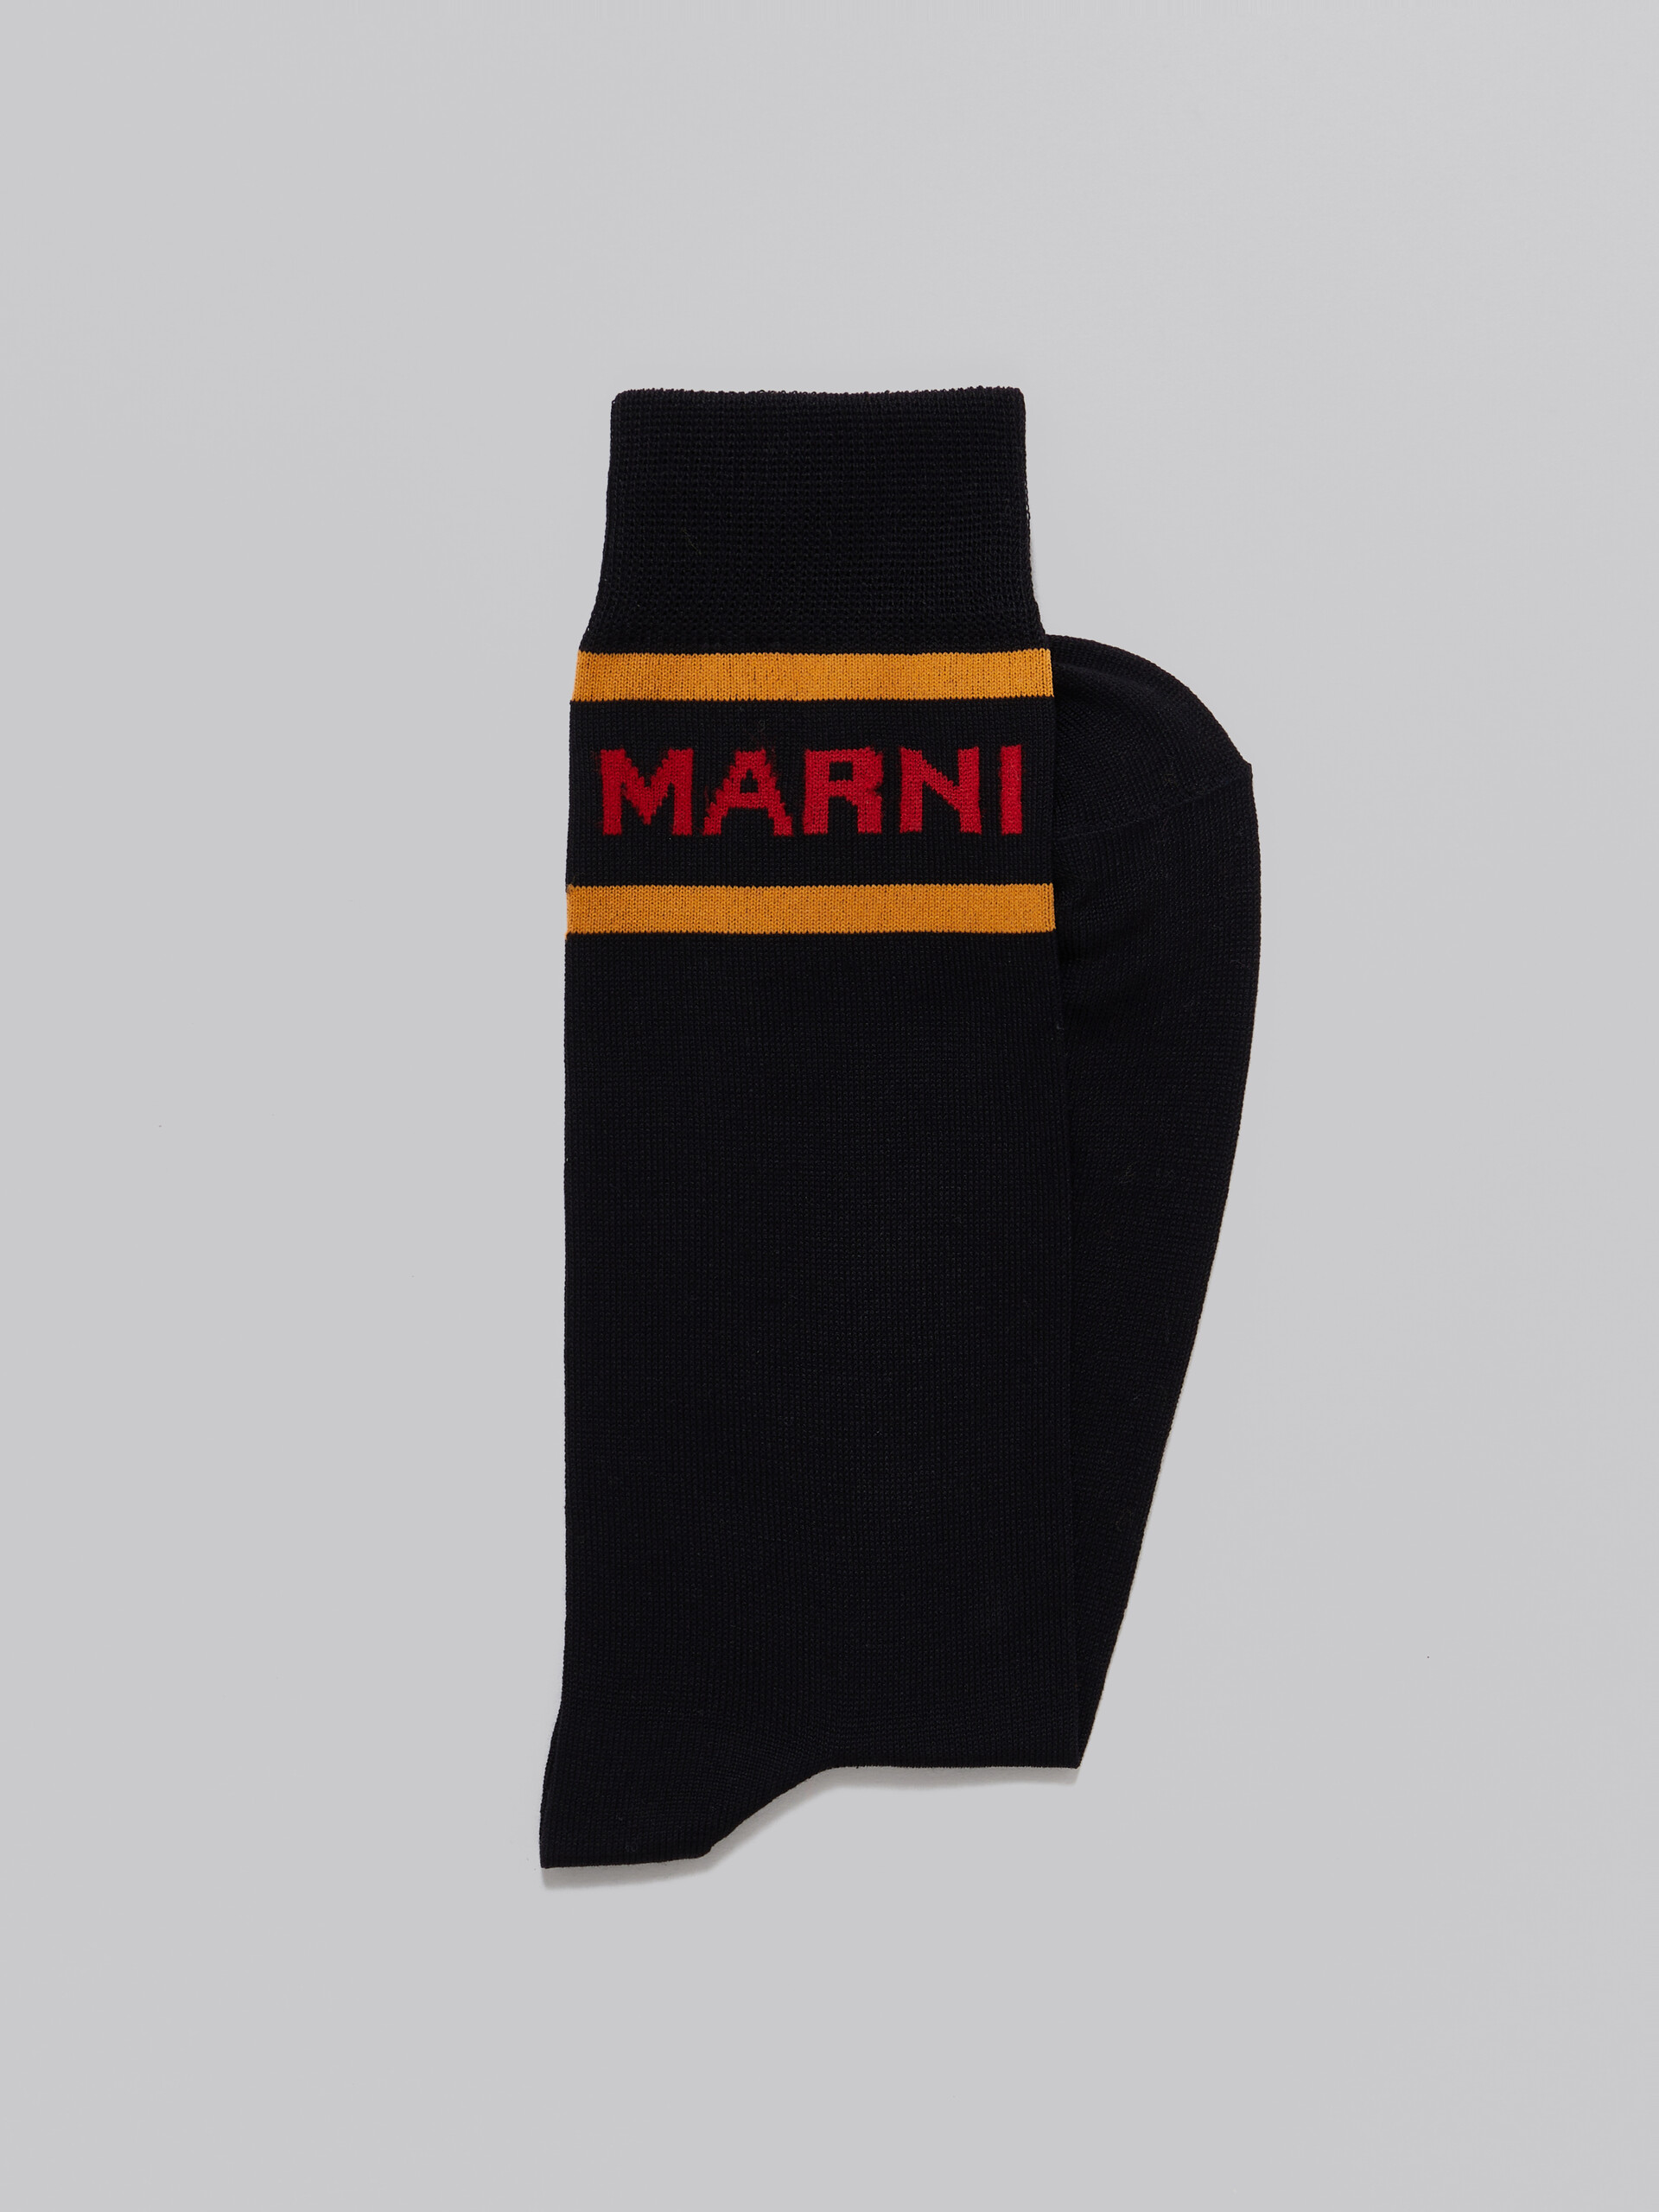 Black socks with logo cuffs - Socks - Image 2